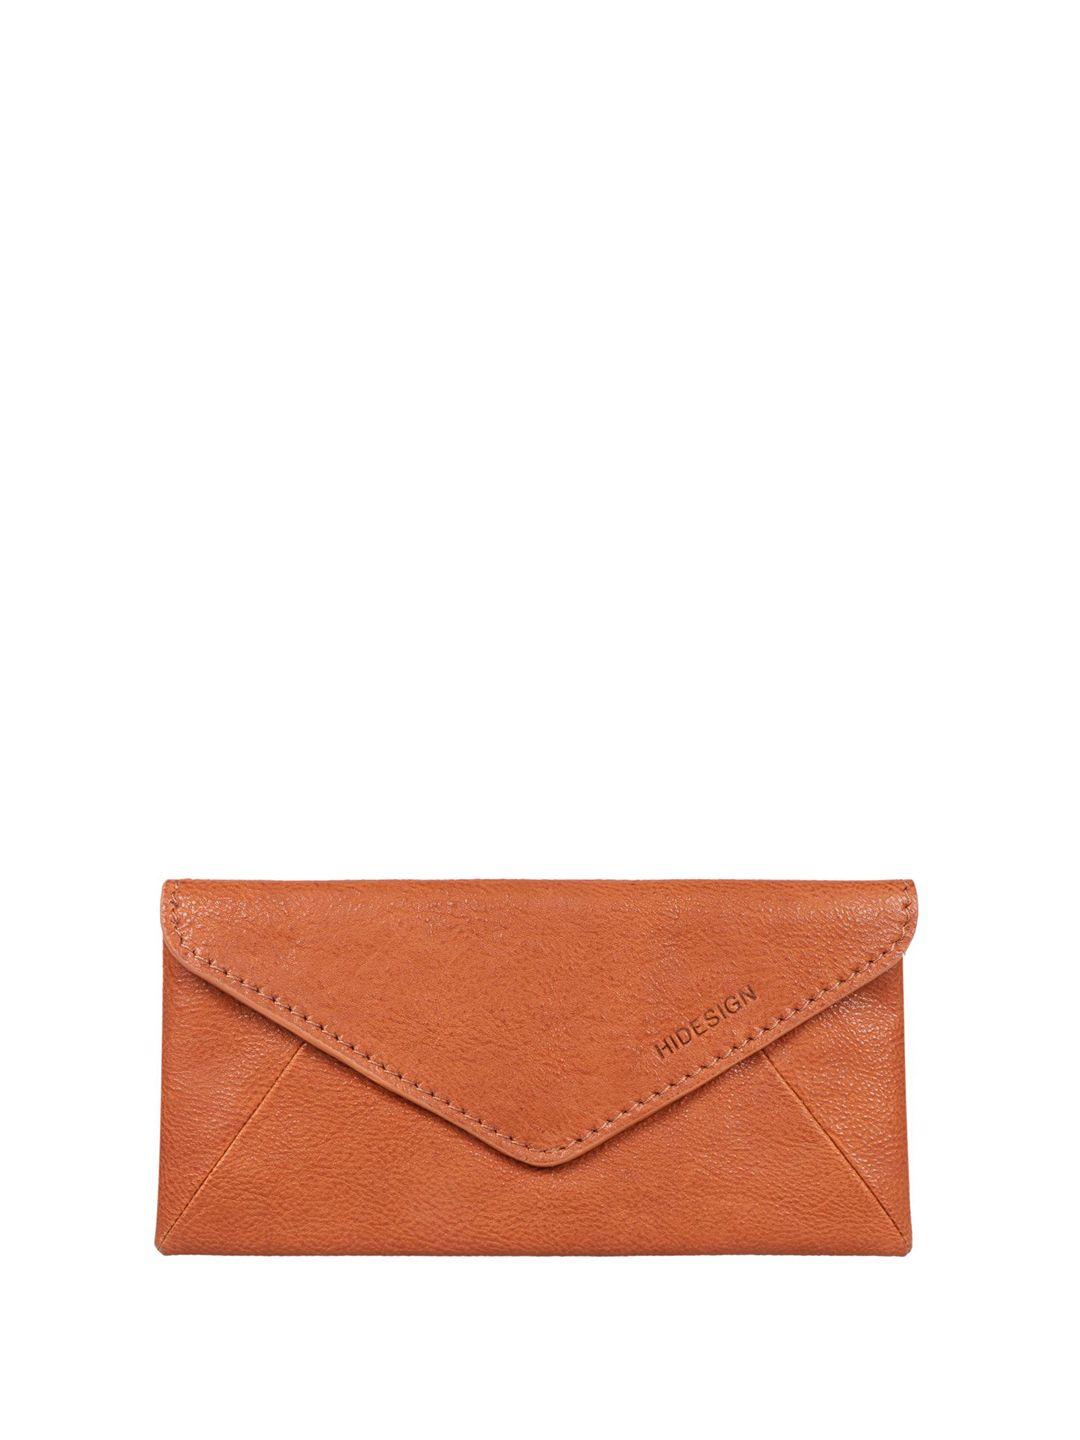 hidesign leather purse clutch